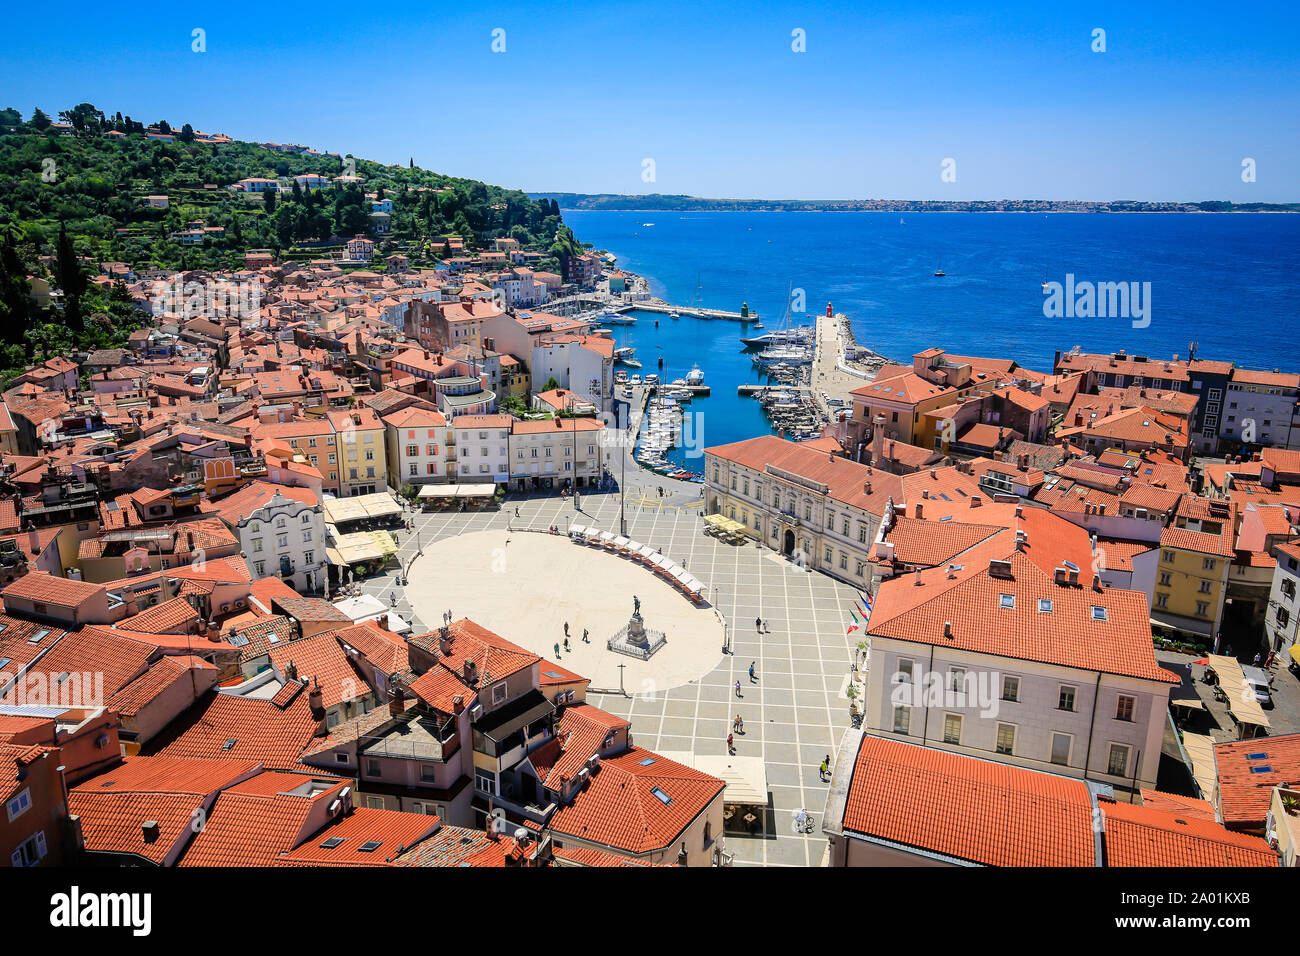 Piran, Istria, Slovenia - city view, view over Tartini Square and the roofs of the Mediterranean port.  Piran, Istrien, Slowenien - Stadtuebersicht, B Stock Photo